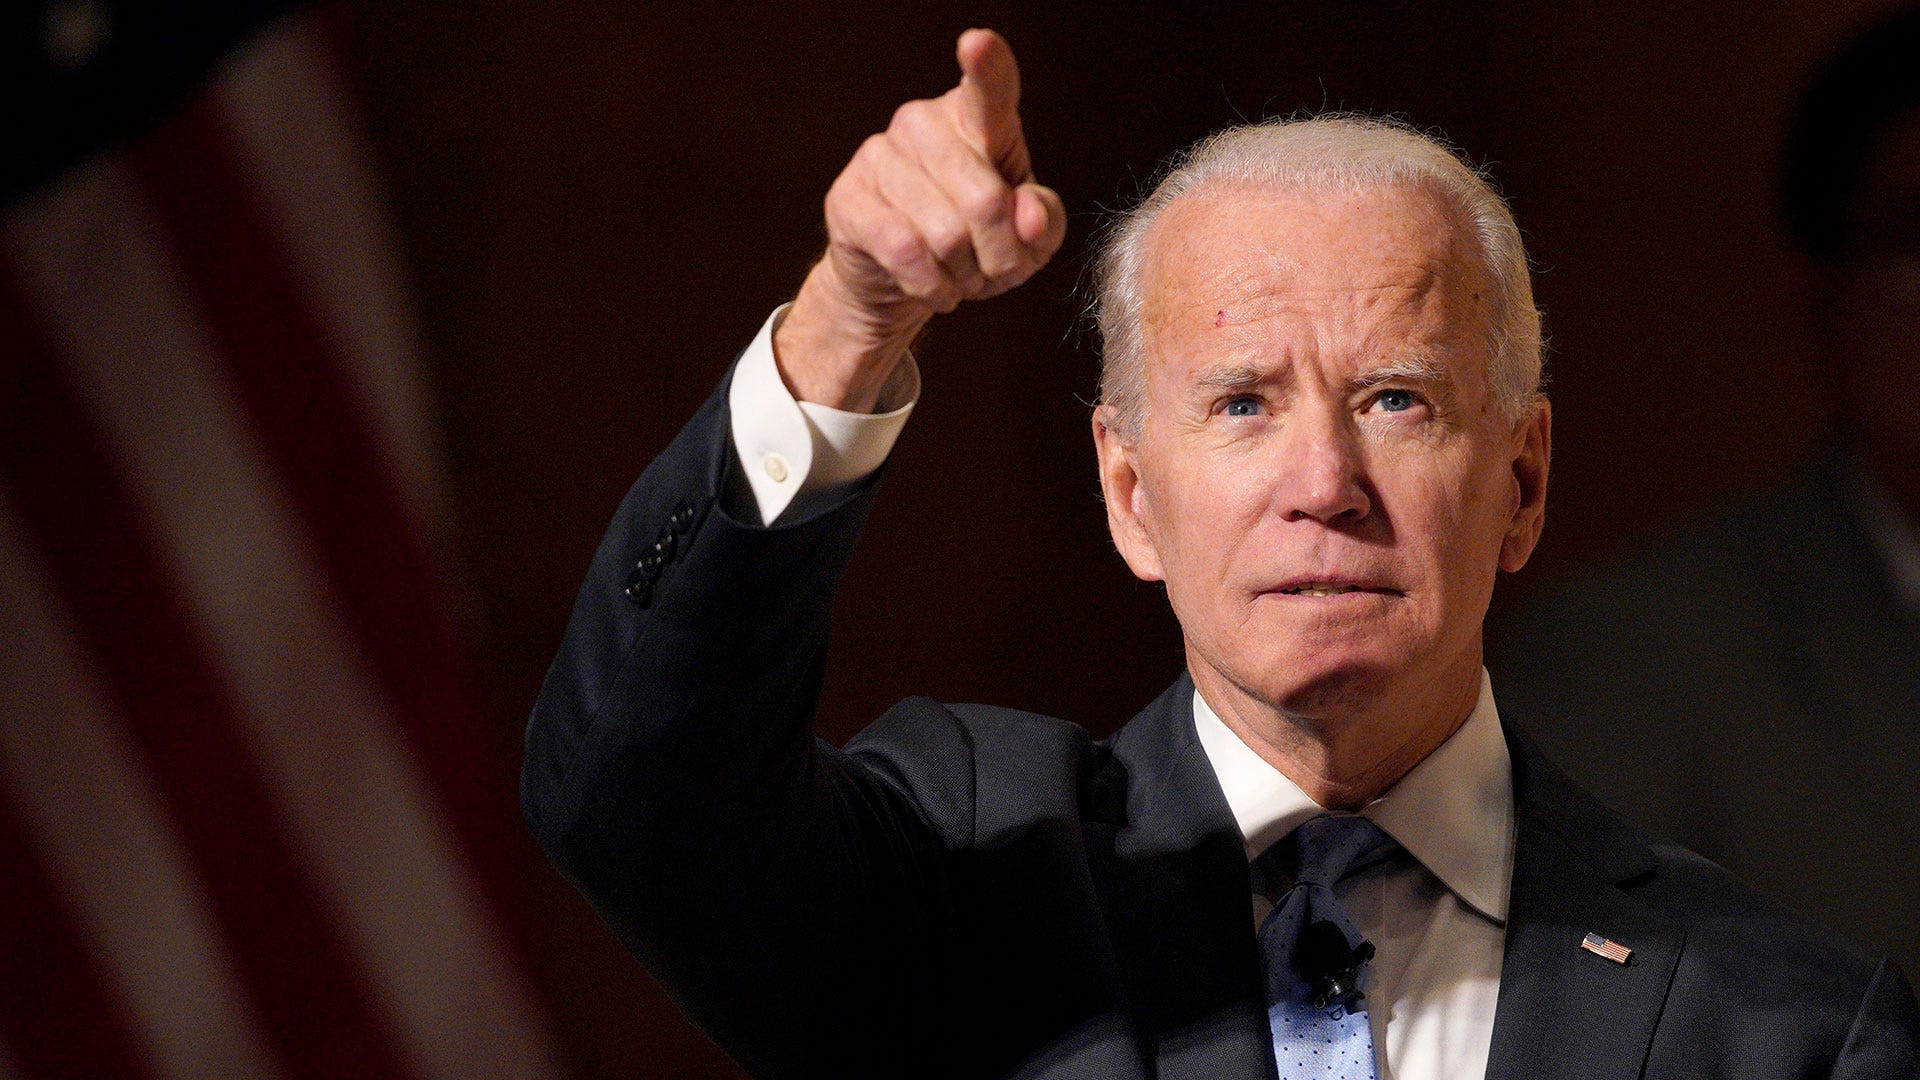 Progressive youth groups issue a list of demands for Joe Biden